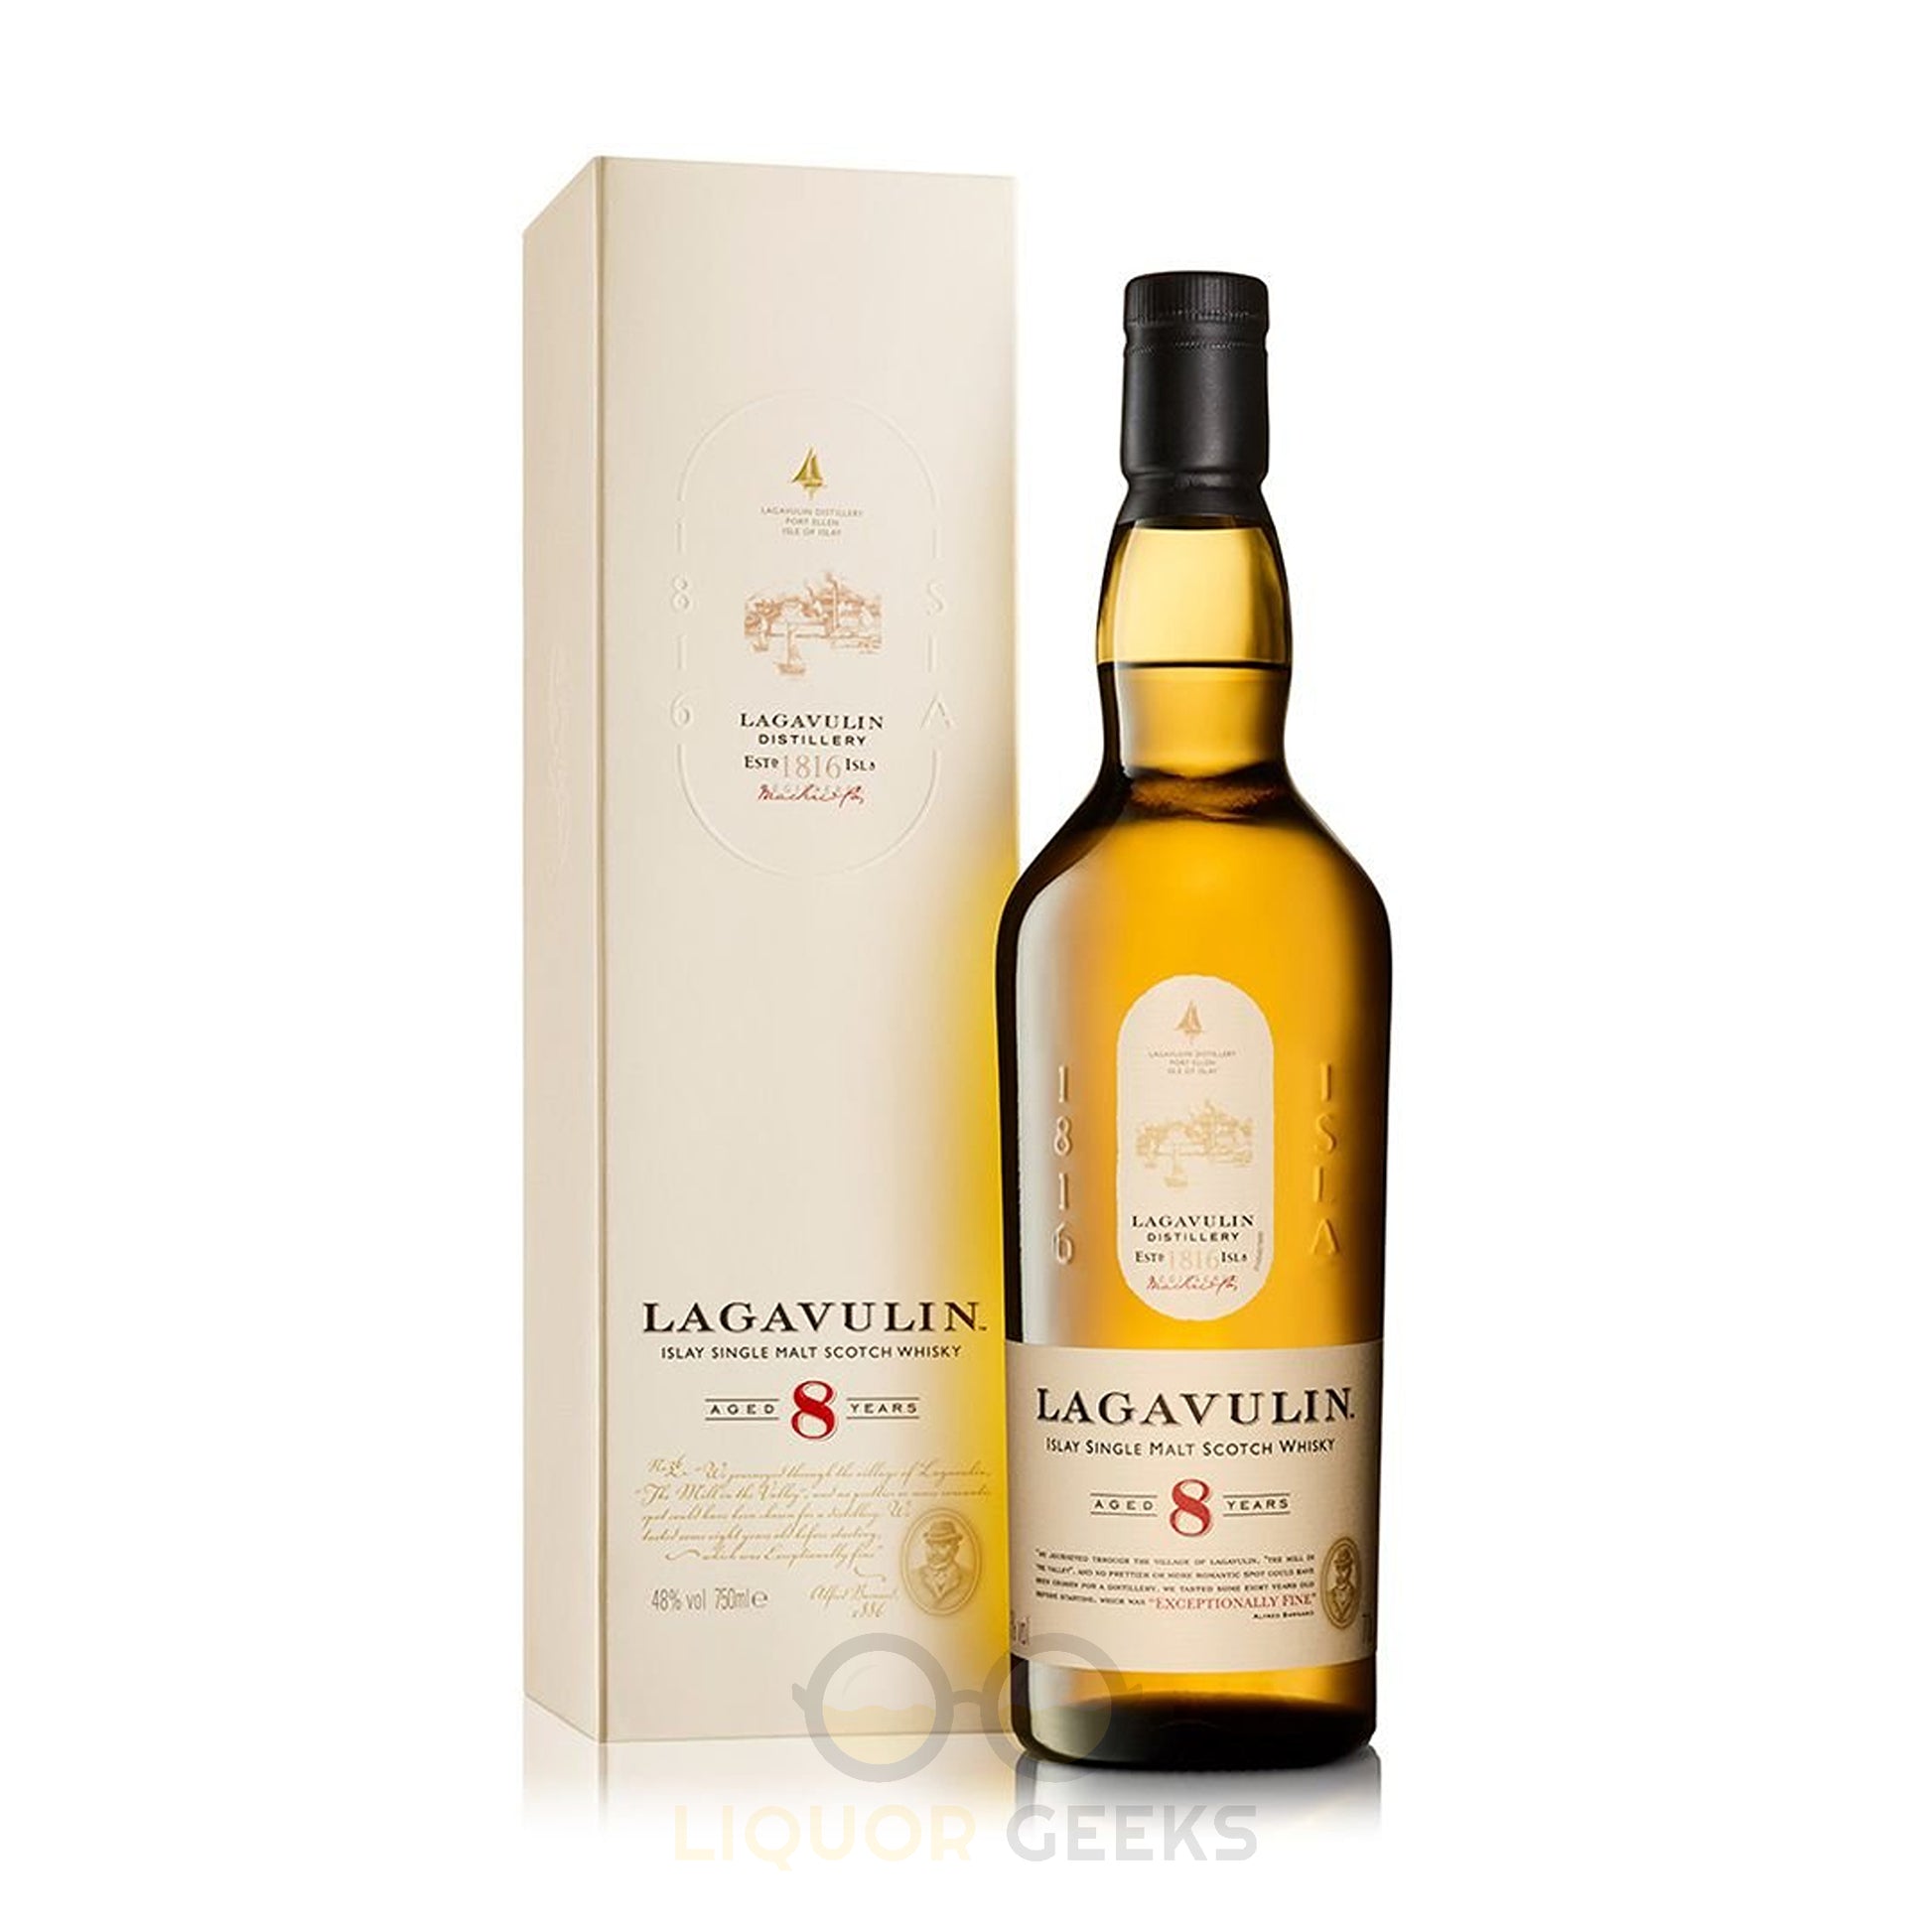 Lagavulin Aged 8 Years Single Malt Scotch Whisky - Liquor Geeks